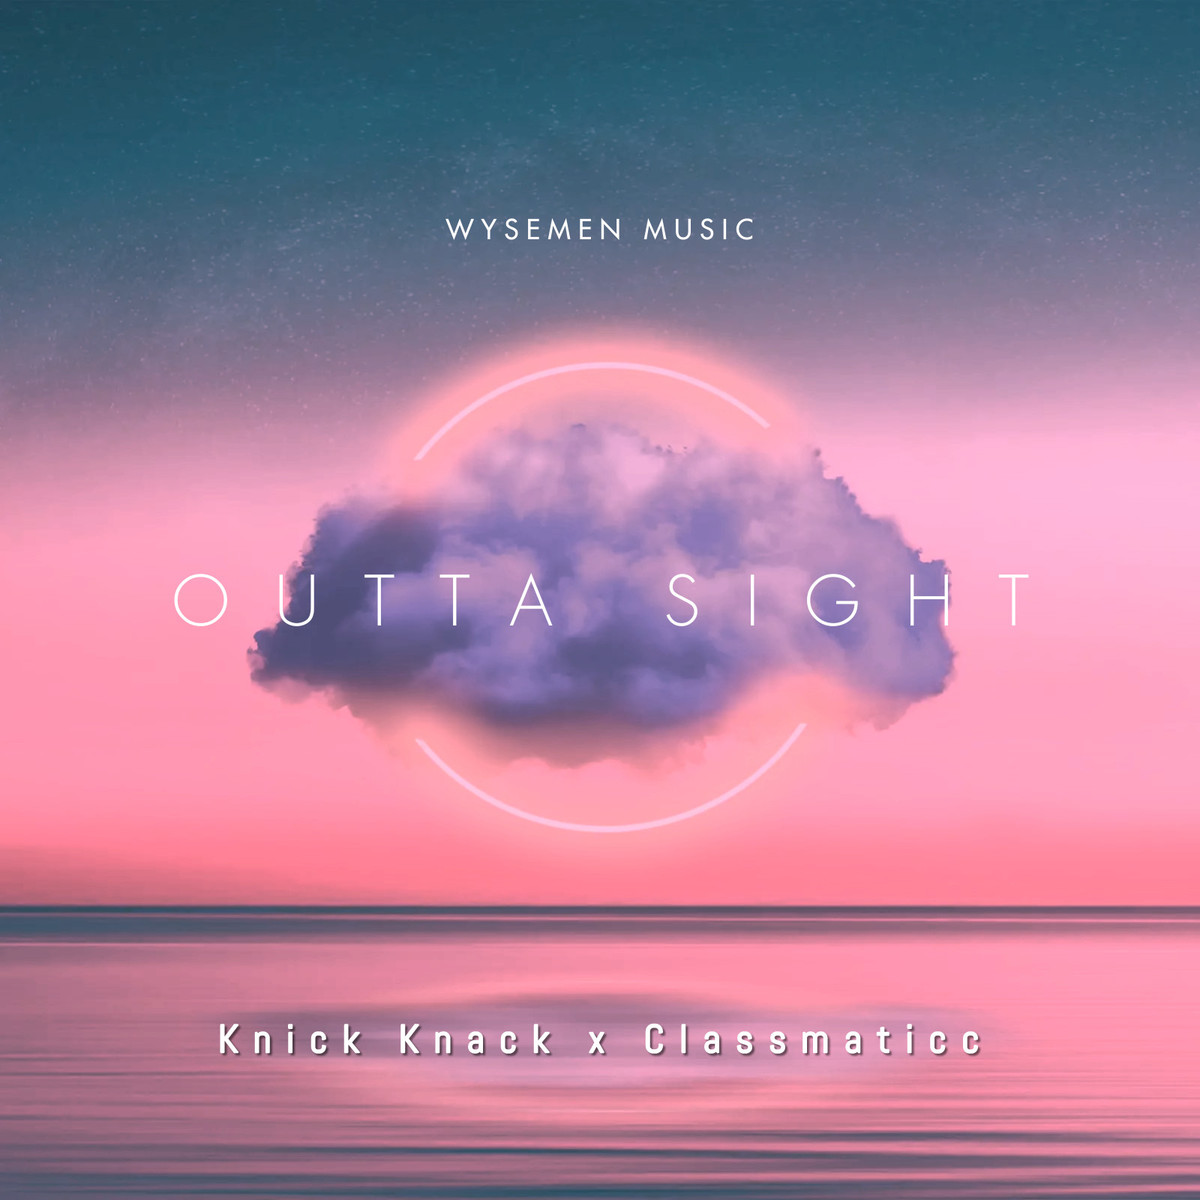 New Music:  Outta Sight  By Knick Knack & Classmaticc